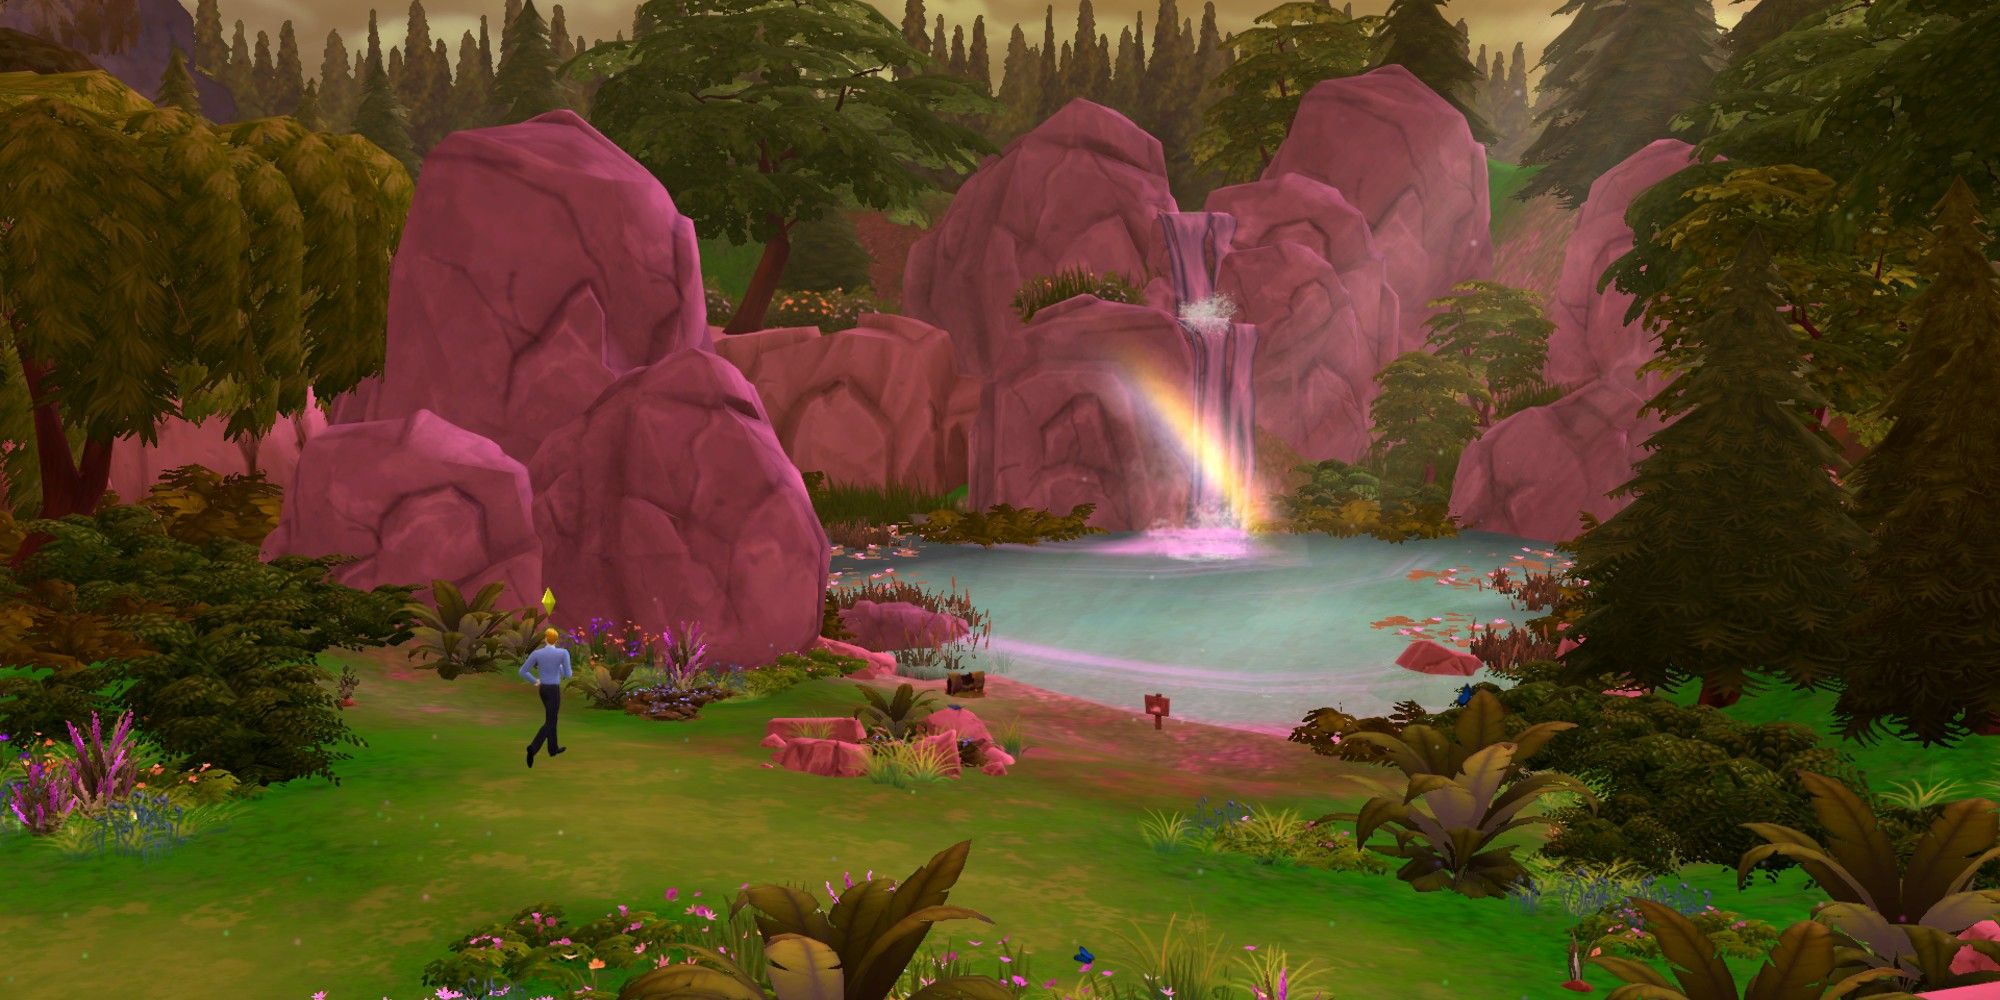 Sylvan Glade em Willow Creek em The Sims 4